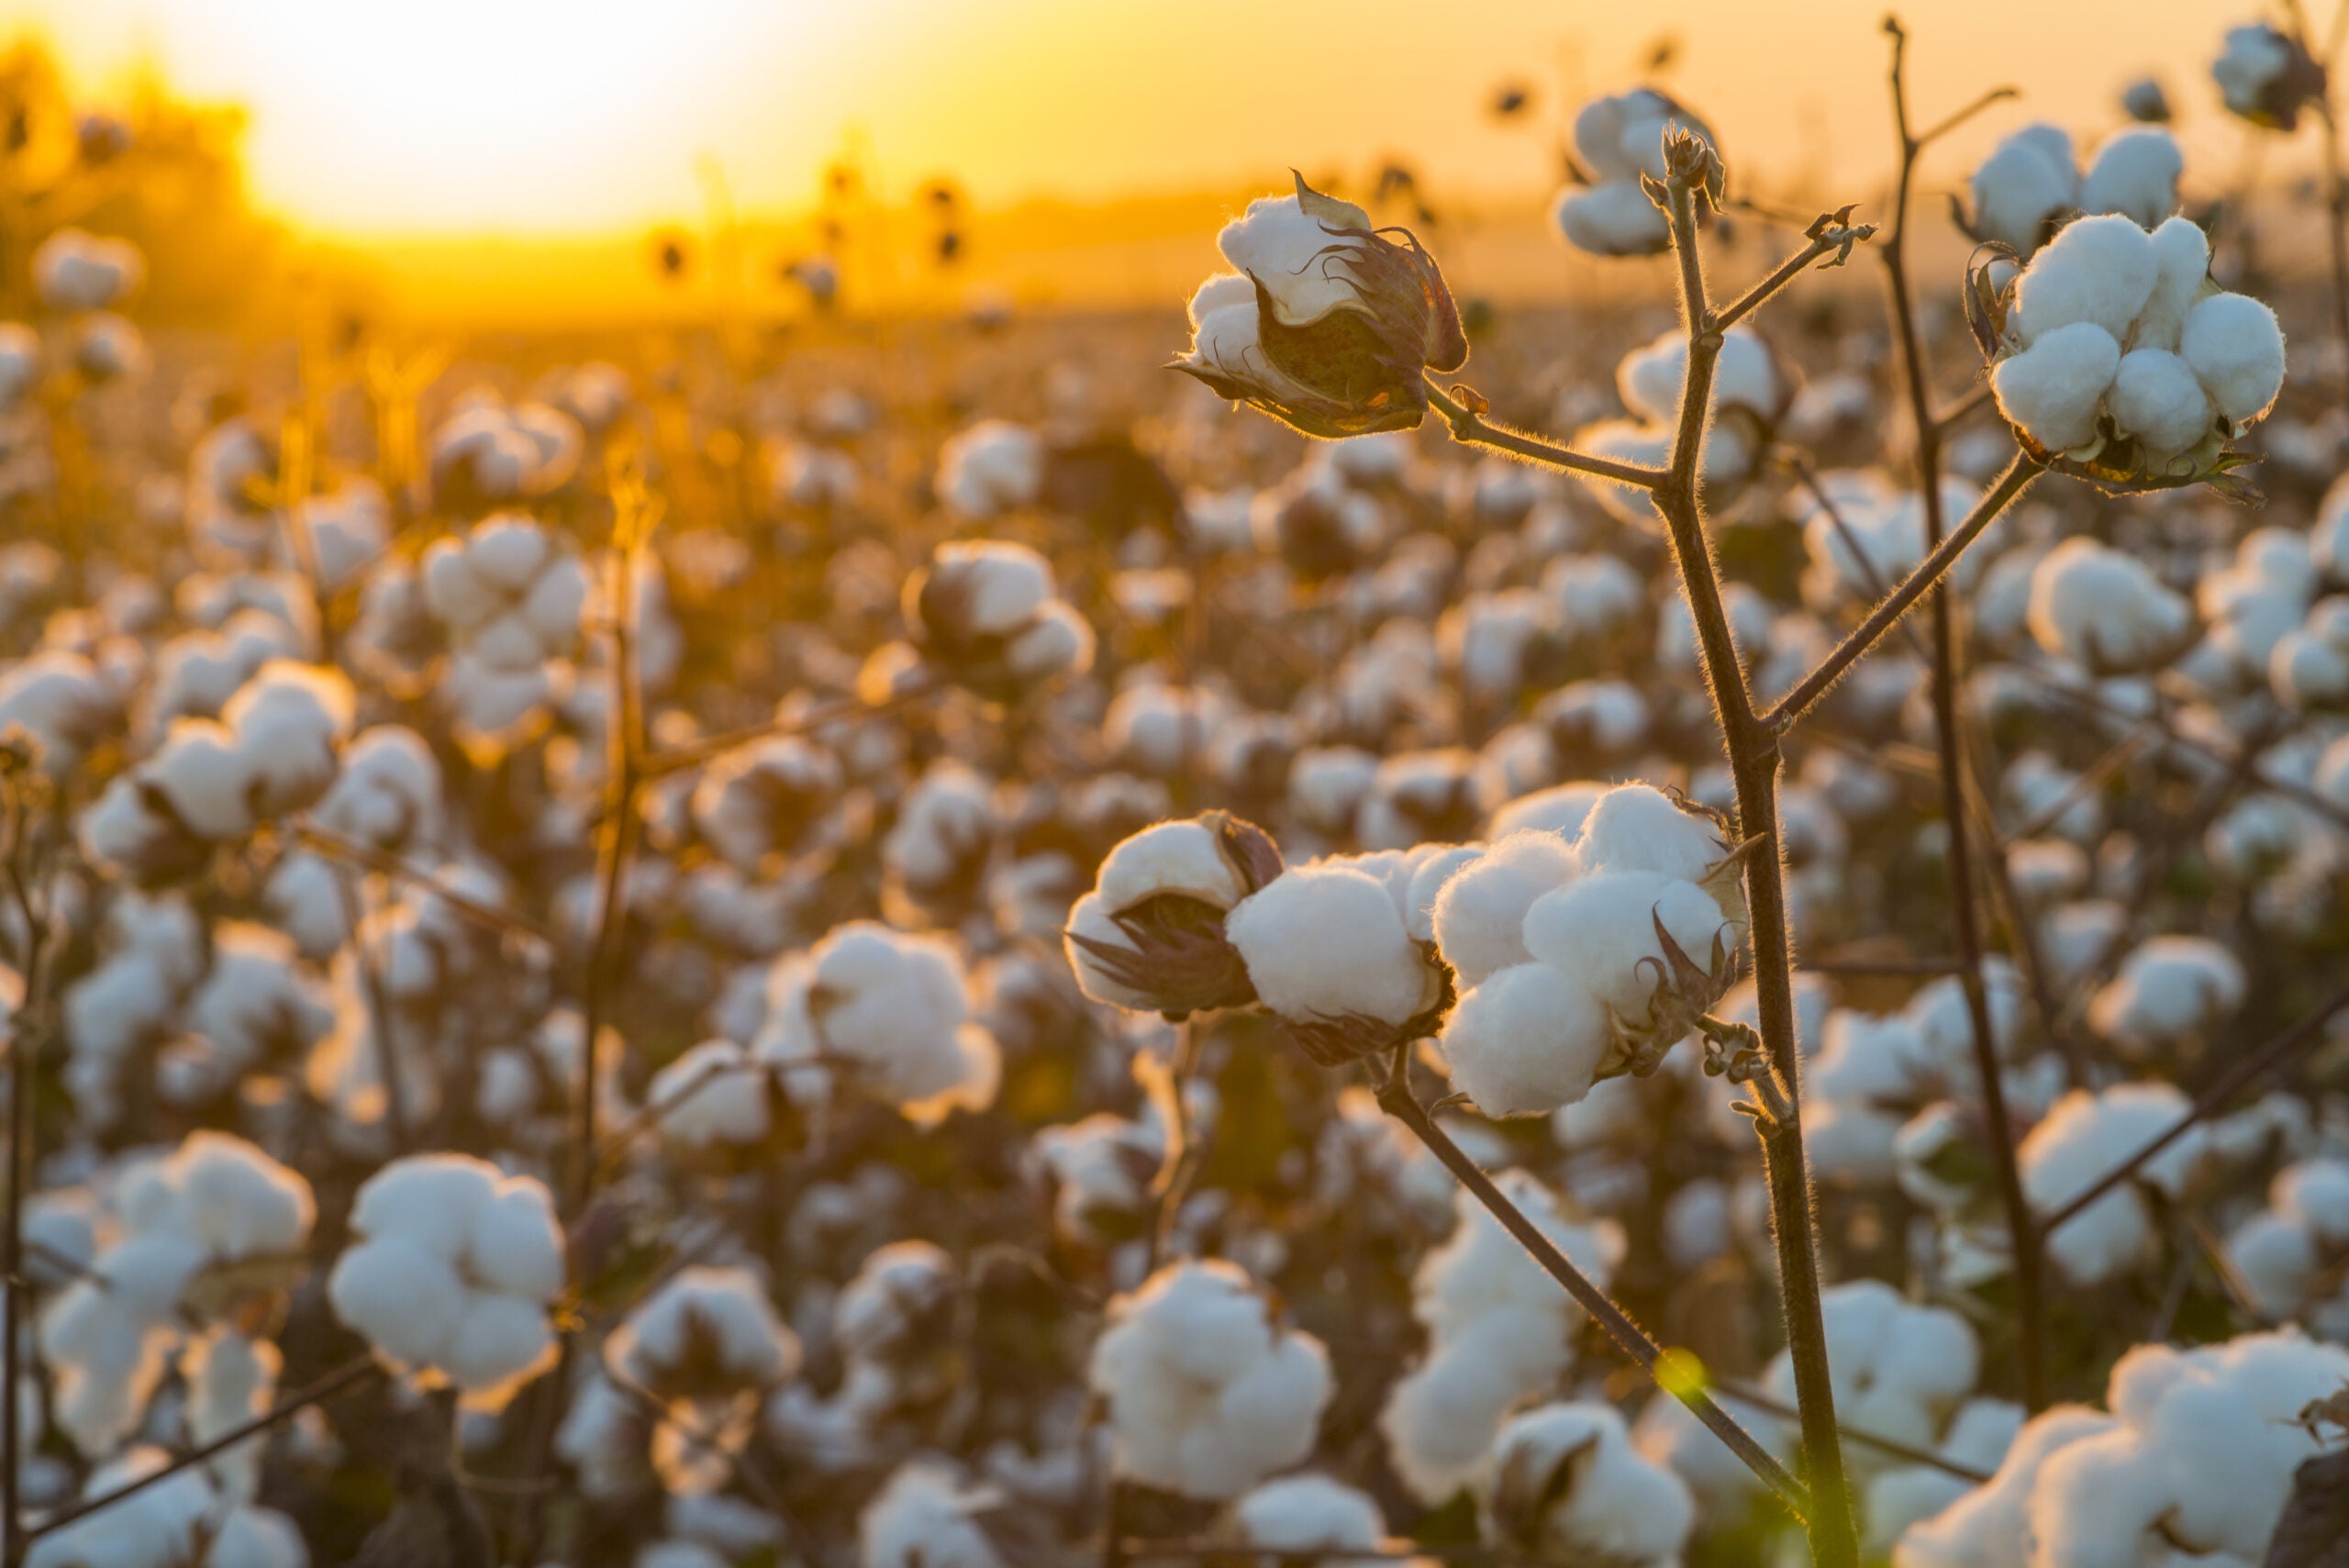 Haelixa marker traces GOTS compliant cotton from Tanzania